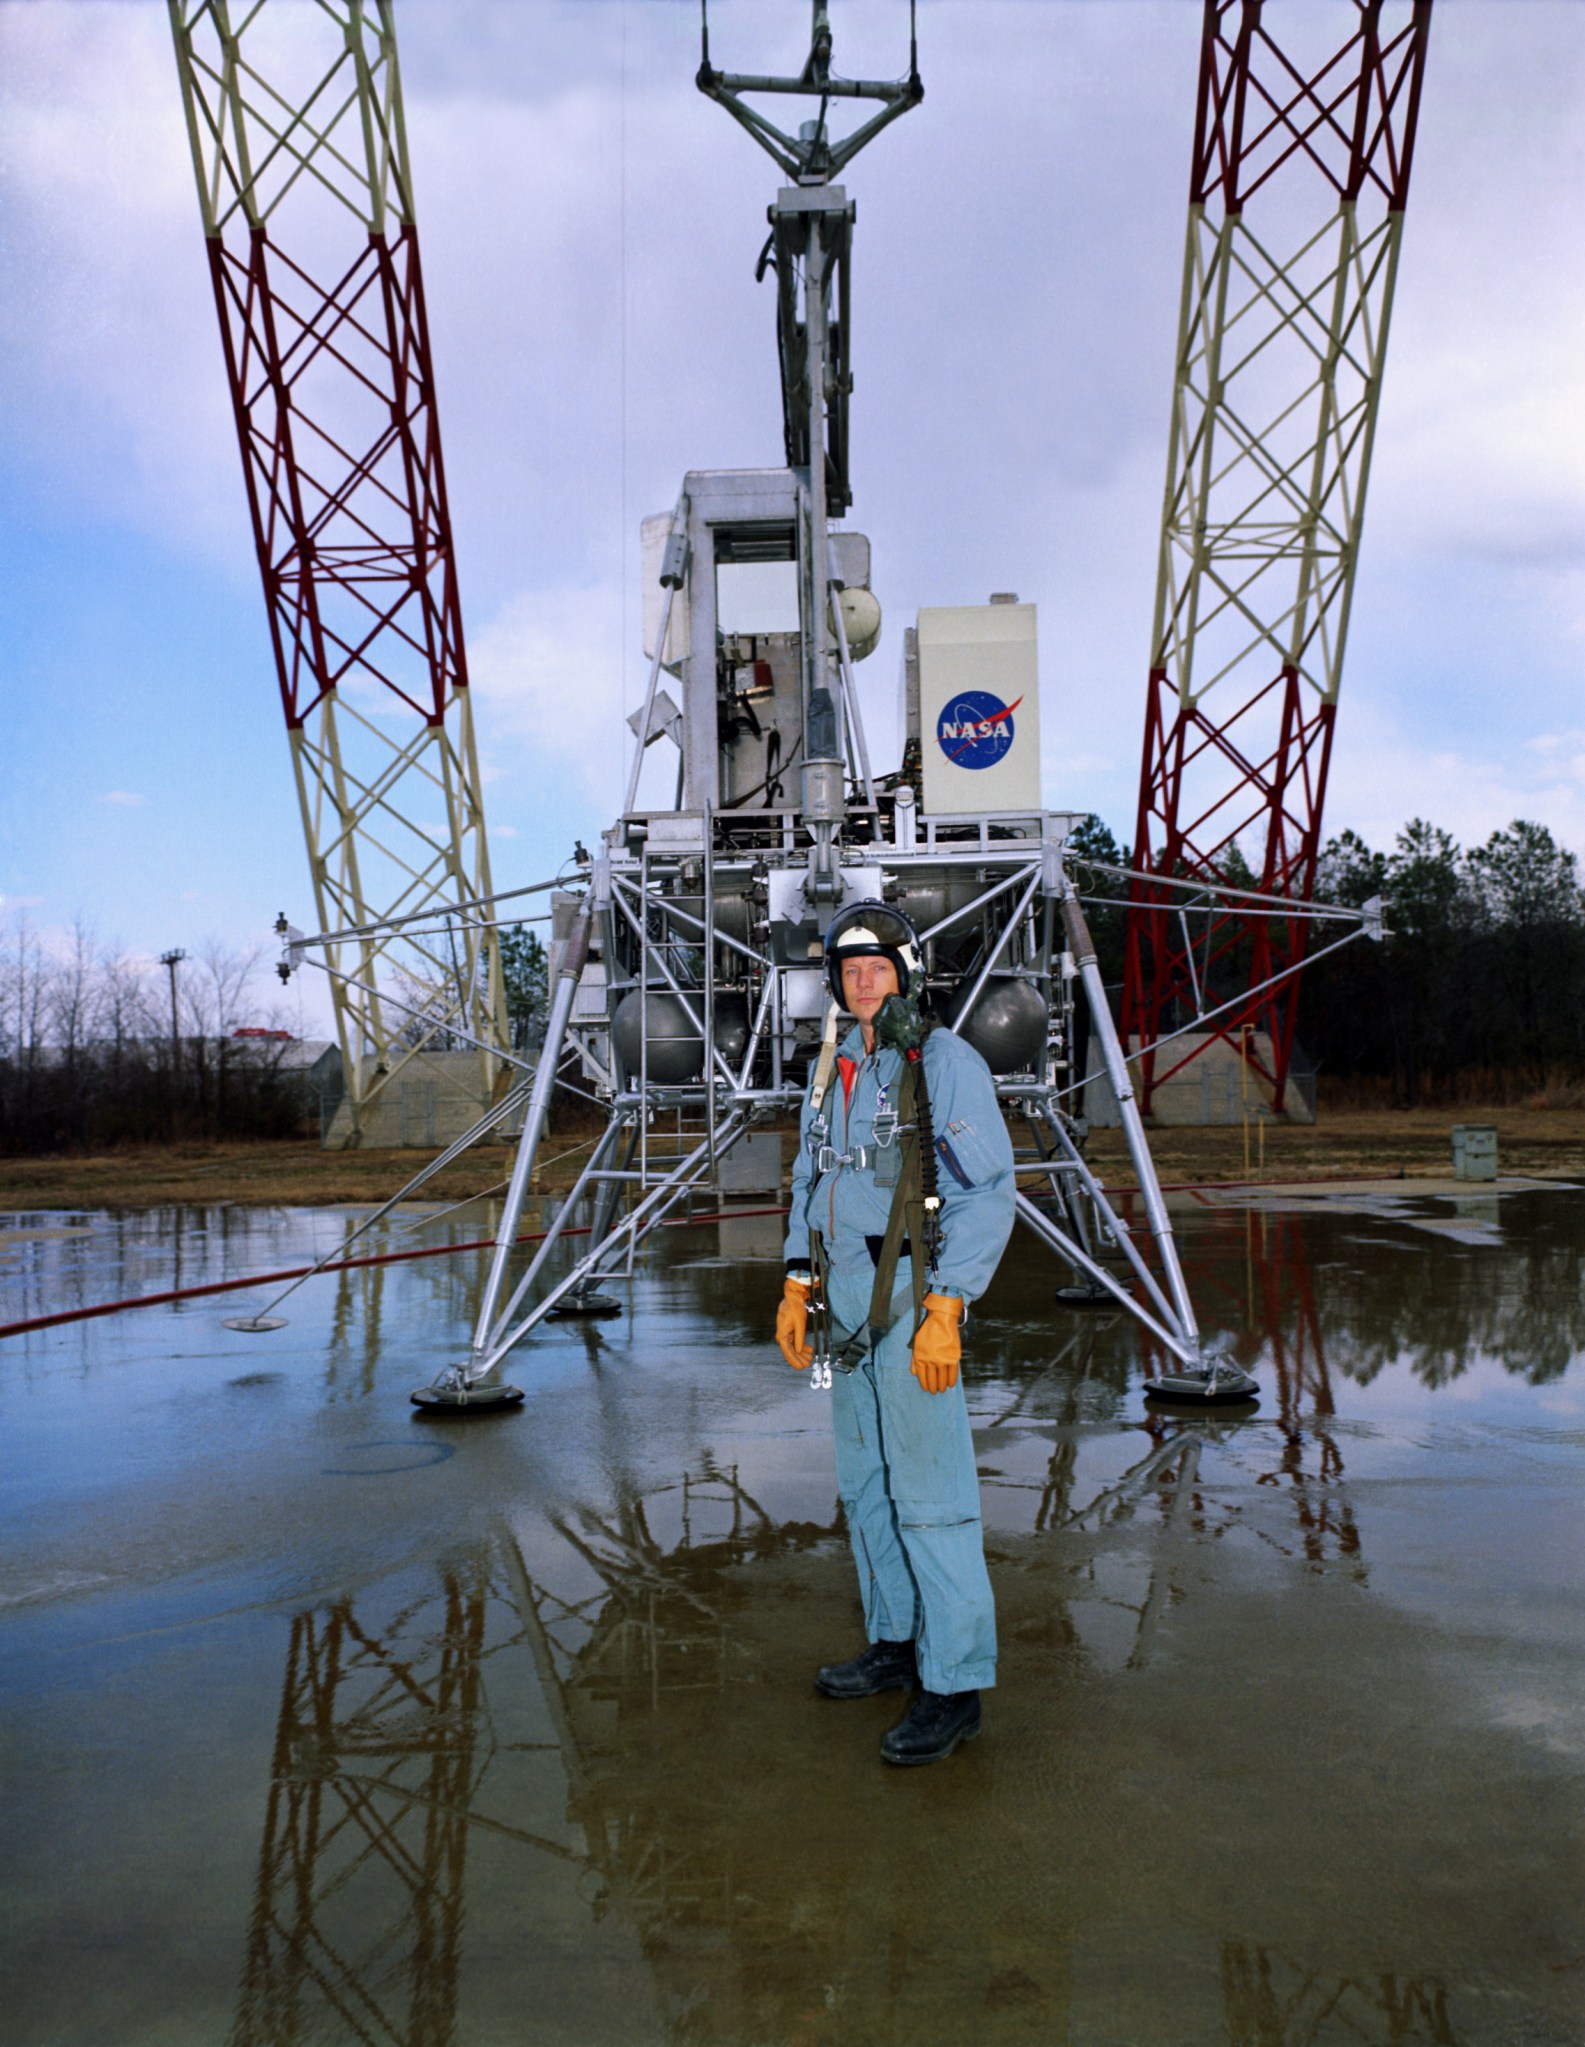 Neil Armstrong at NASA Langley's Lunar Landing Research Facility